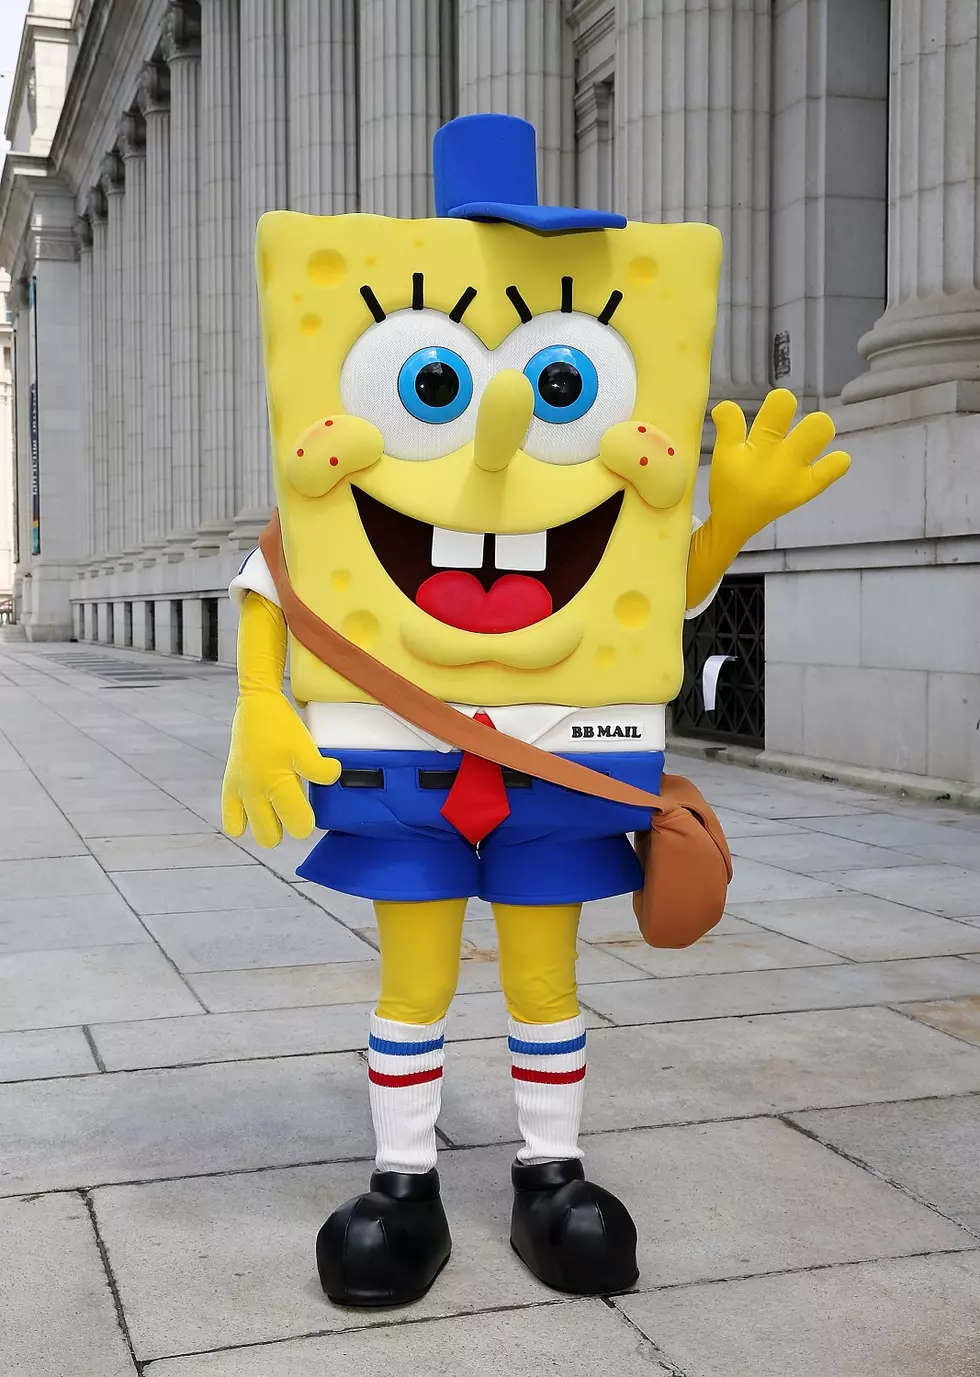 The Spongebob Uniforms Worn By NBA G-League Team [Photo]